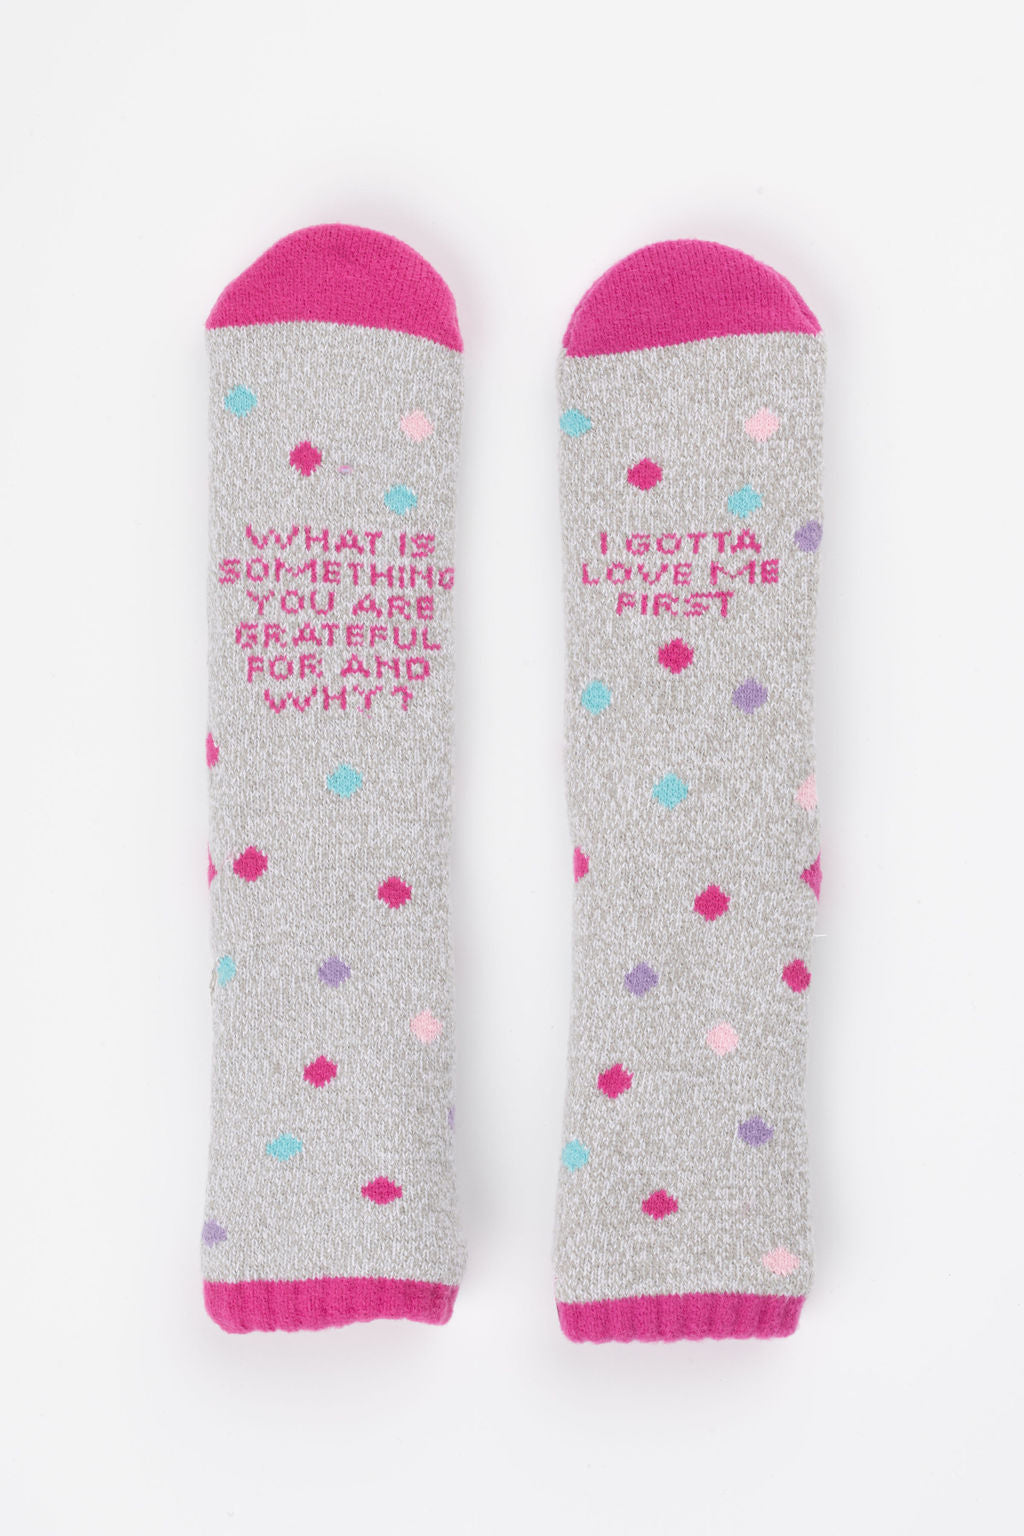 Posisocks women's grey polka dot bed socks